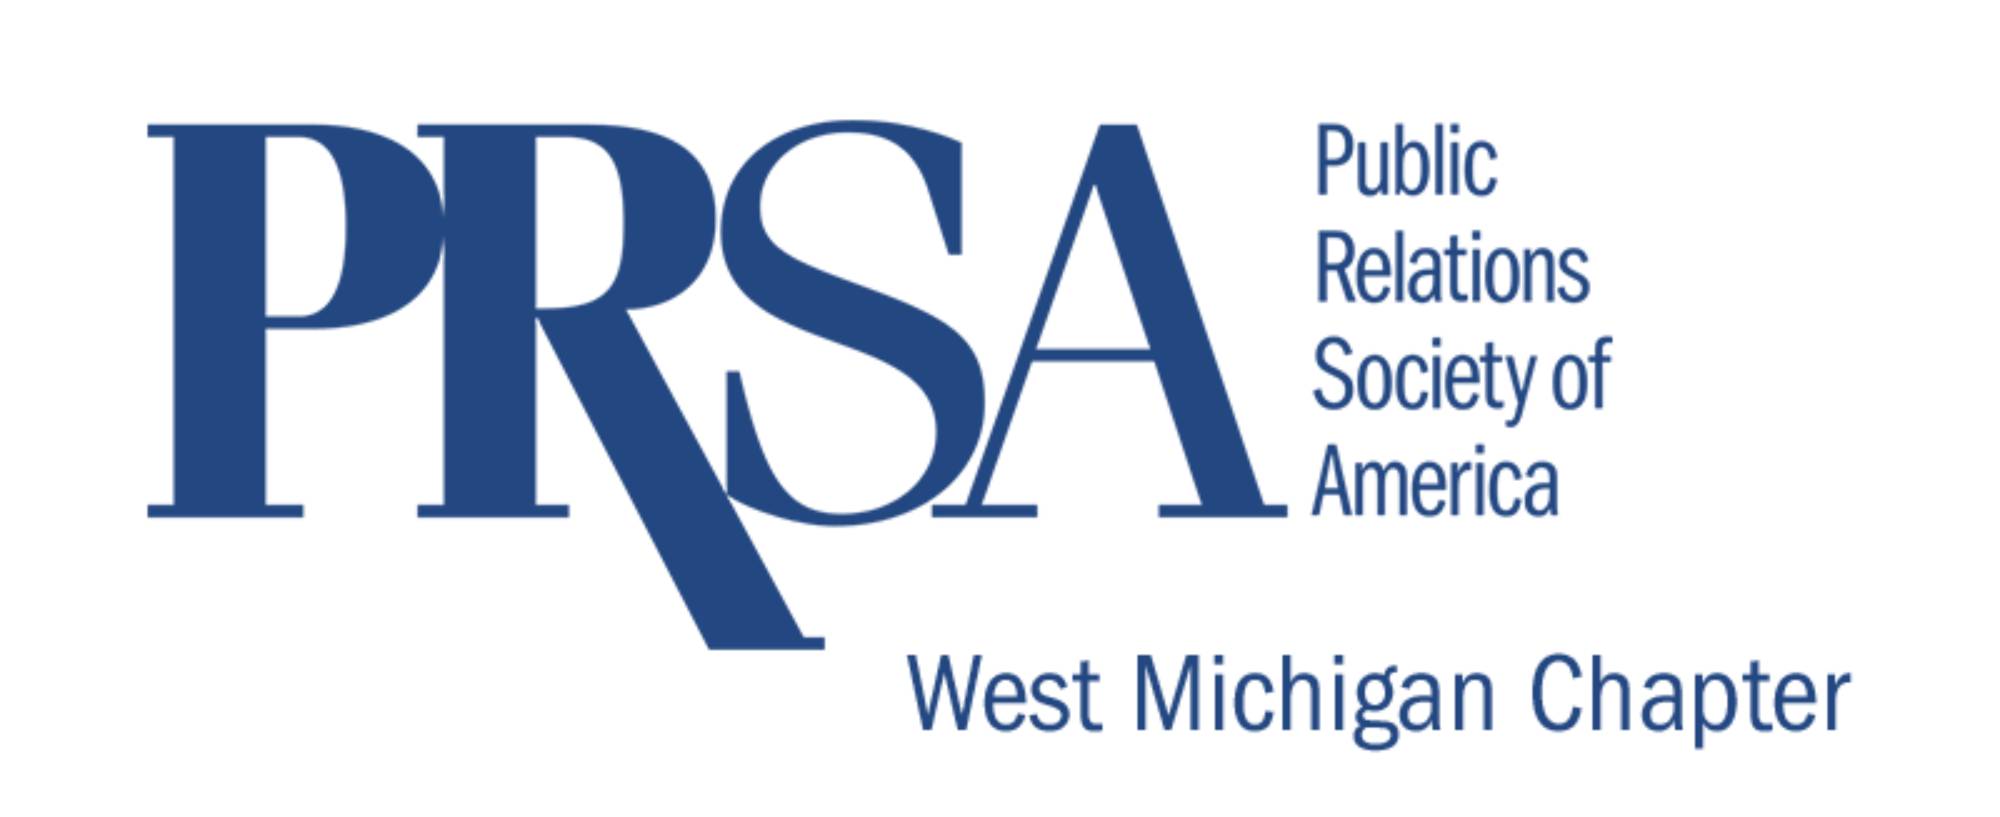 public relations society of America